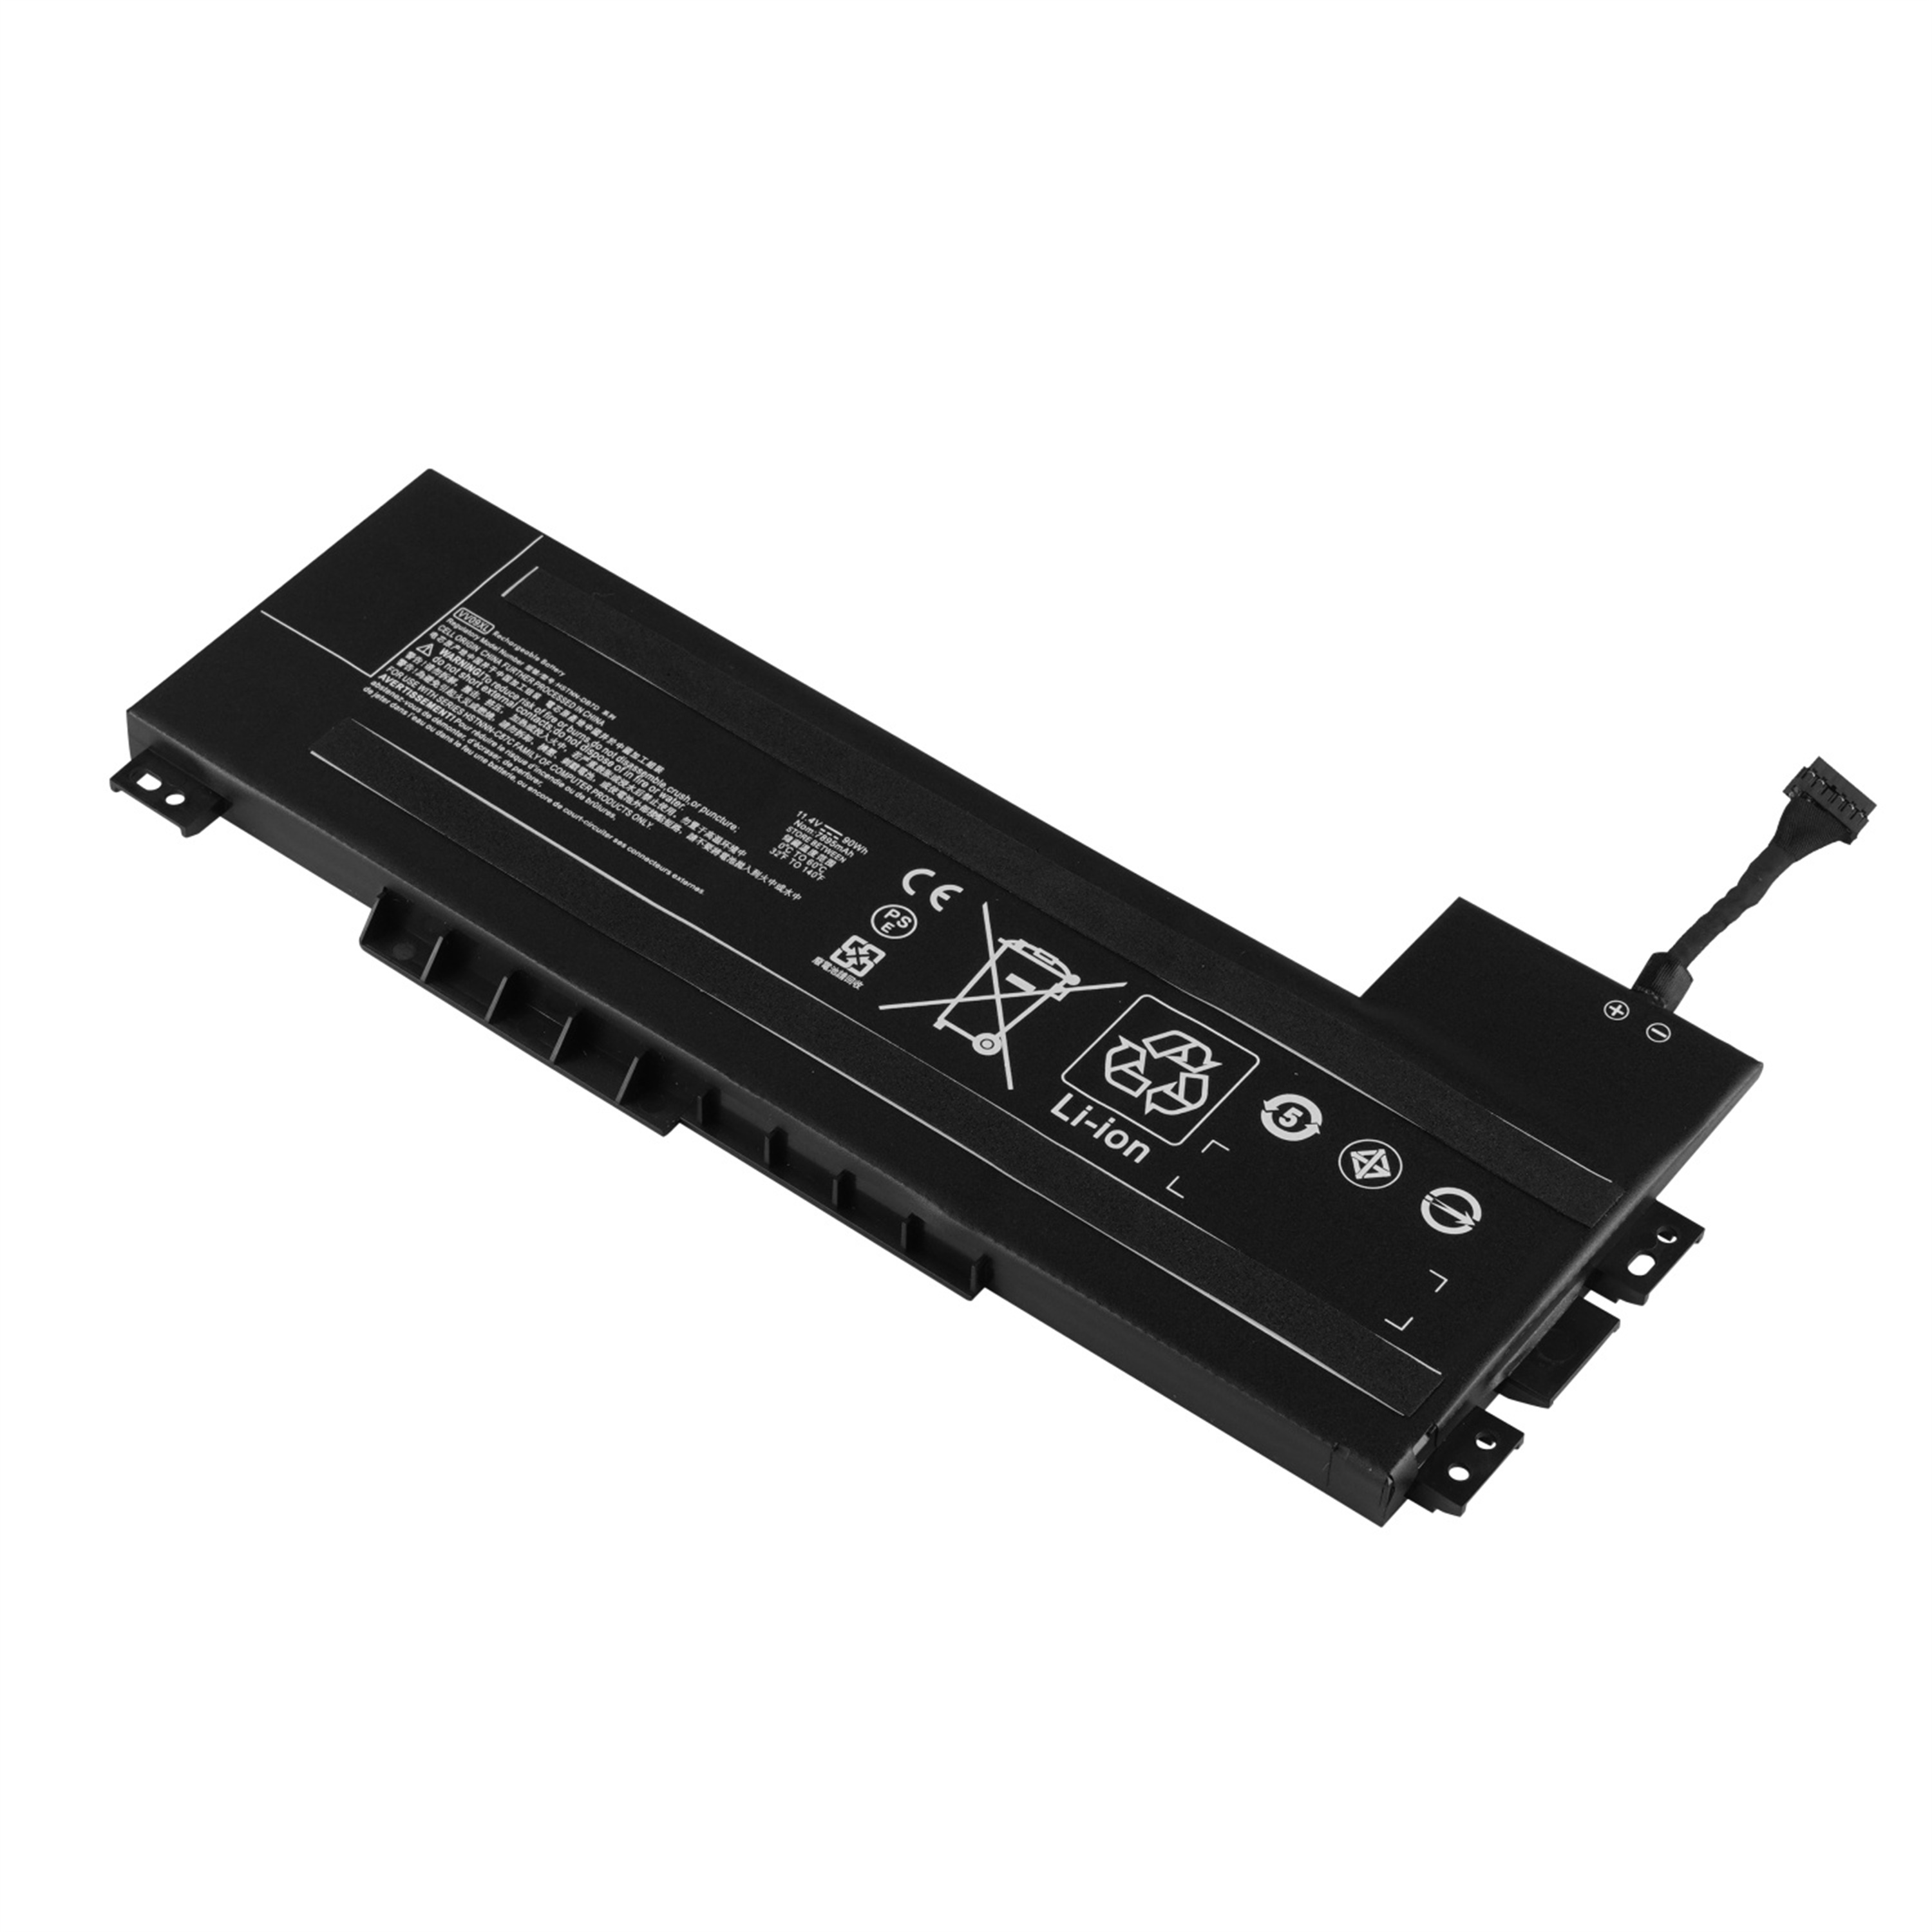 VV09XL rechargeable lithium ion Notebook battery Laptop battery For Hp ZBook 15 G3 G4 17 G3 Series HSTNN-DB7D HSTNN-C87C 808398-2B1 808398-2C1 808452-001 808452-002 11.4V 90Wh 7895mAh